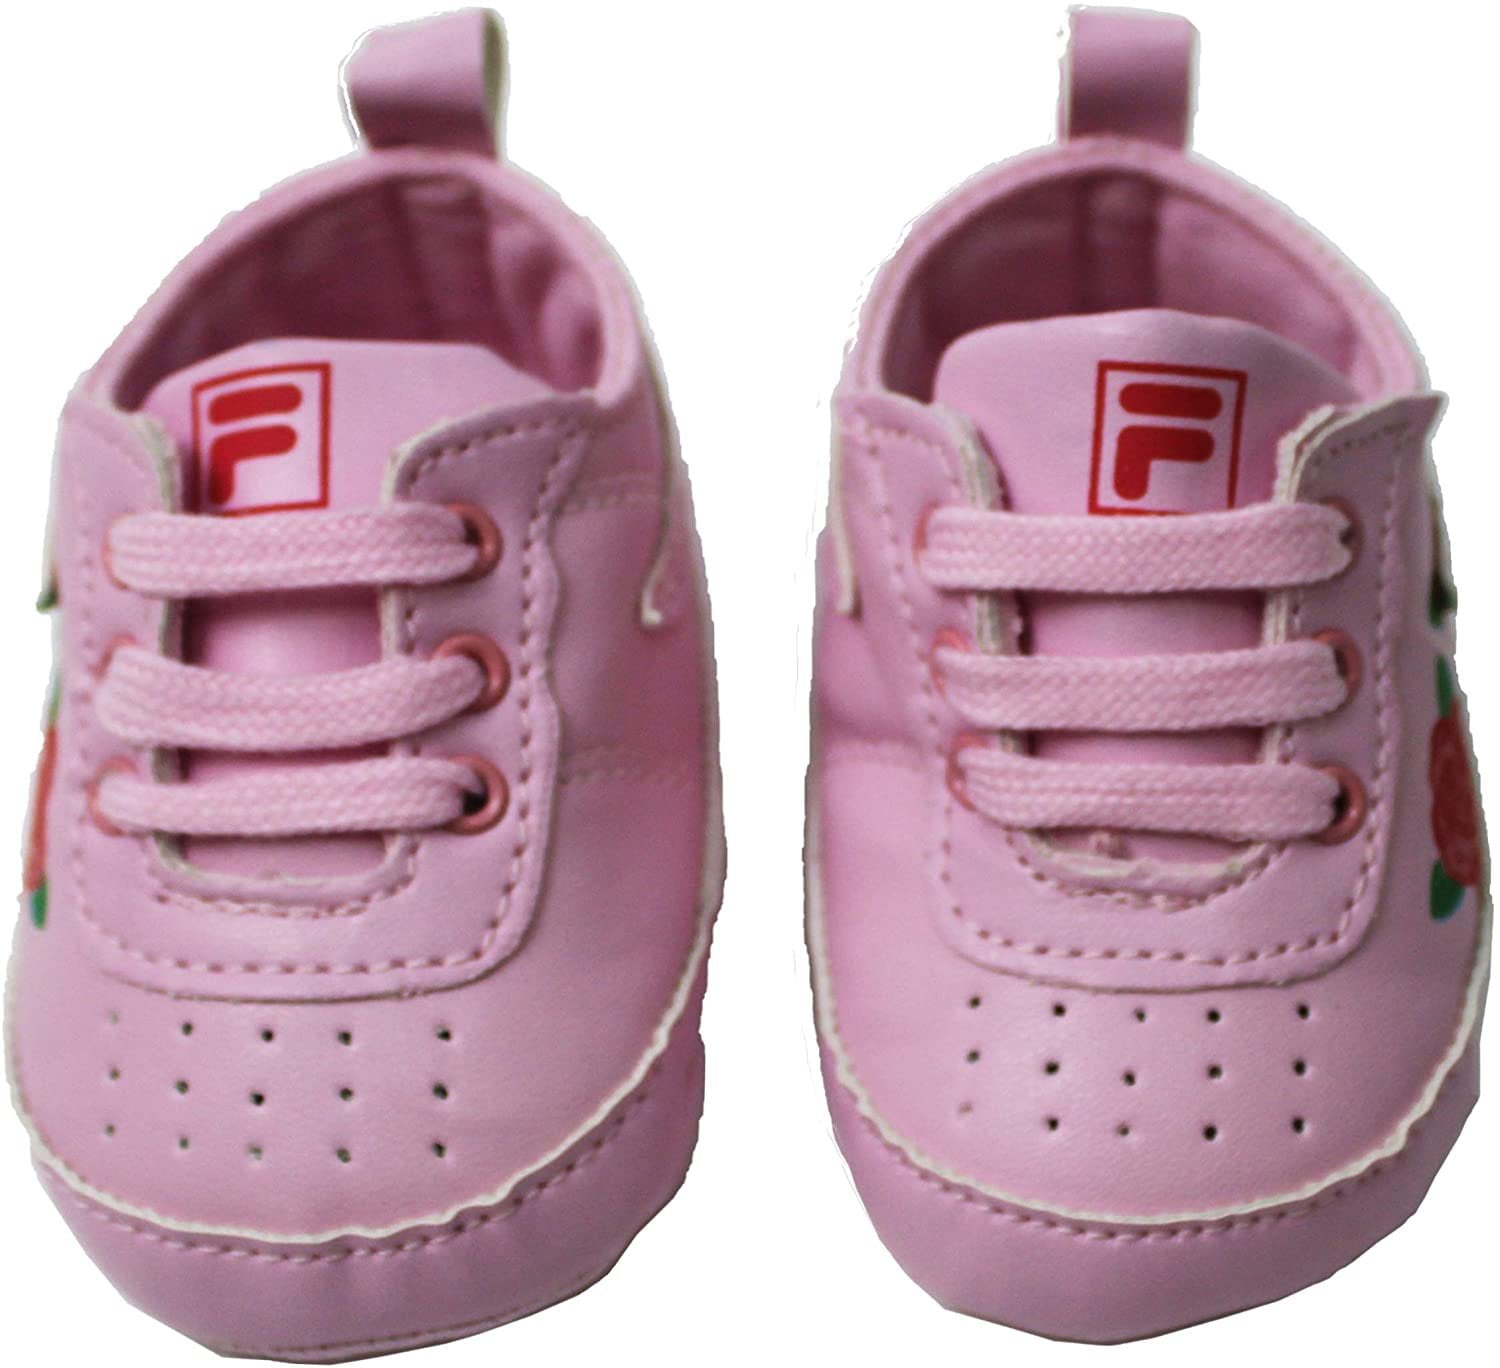 Fila Infant Sneaker Crib Shoe Printed Roses - Blush, 0-6 Months -  Walmart.com